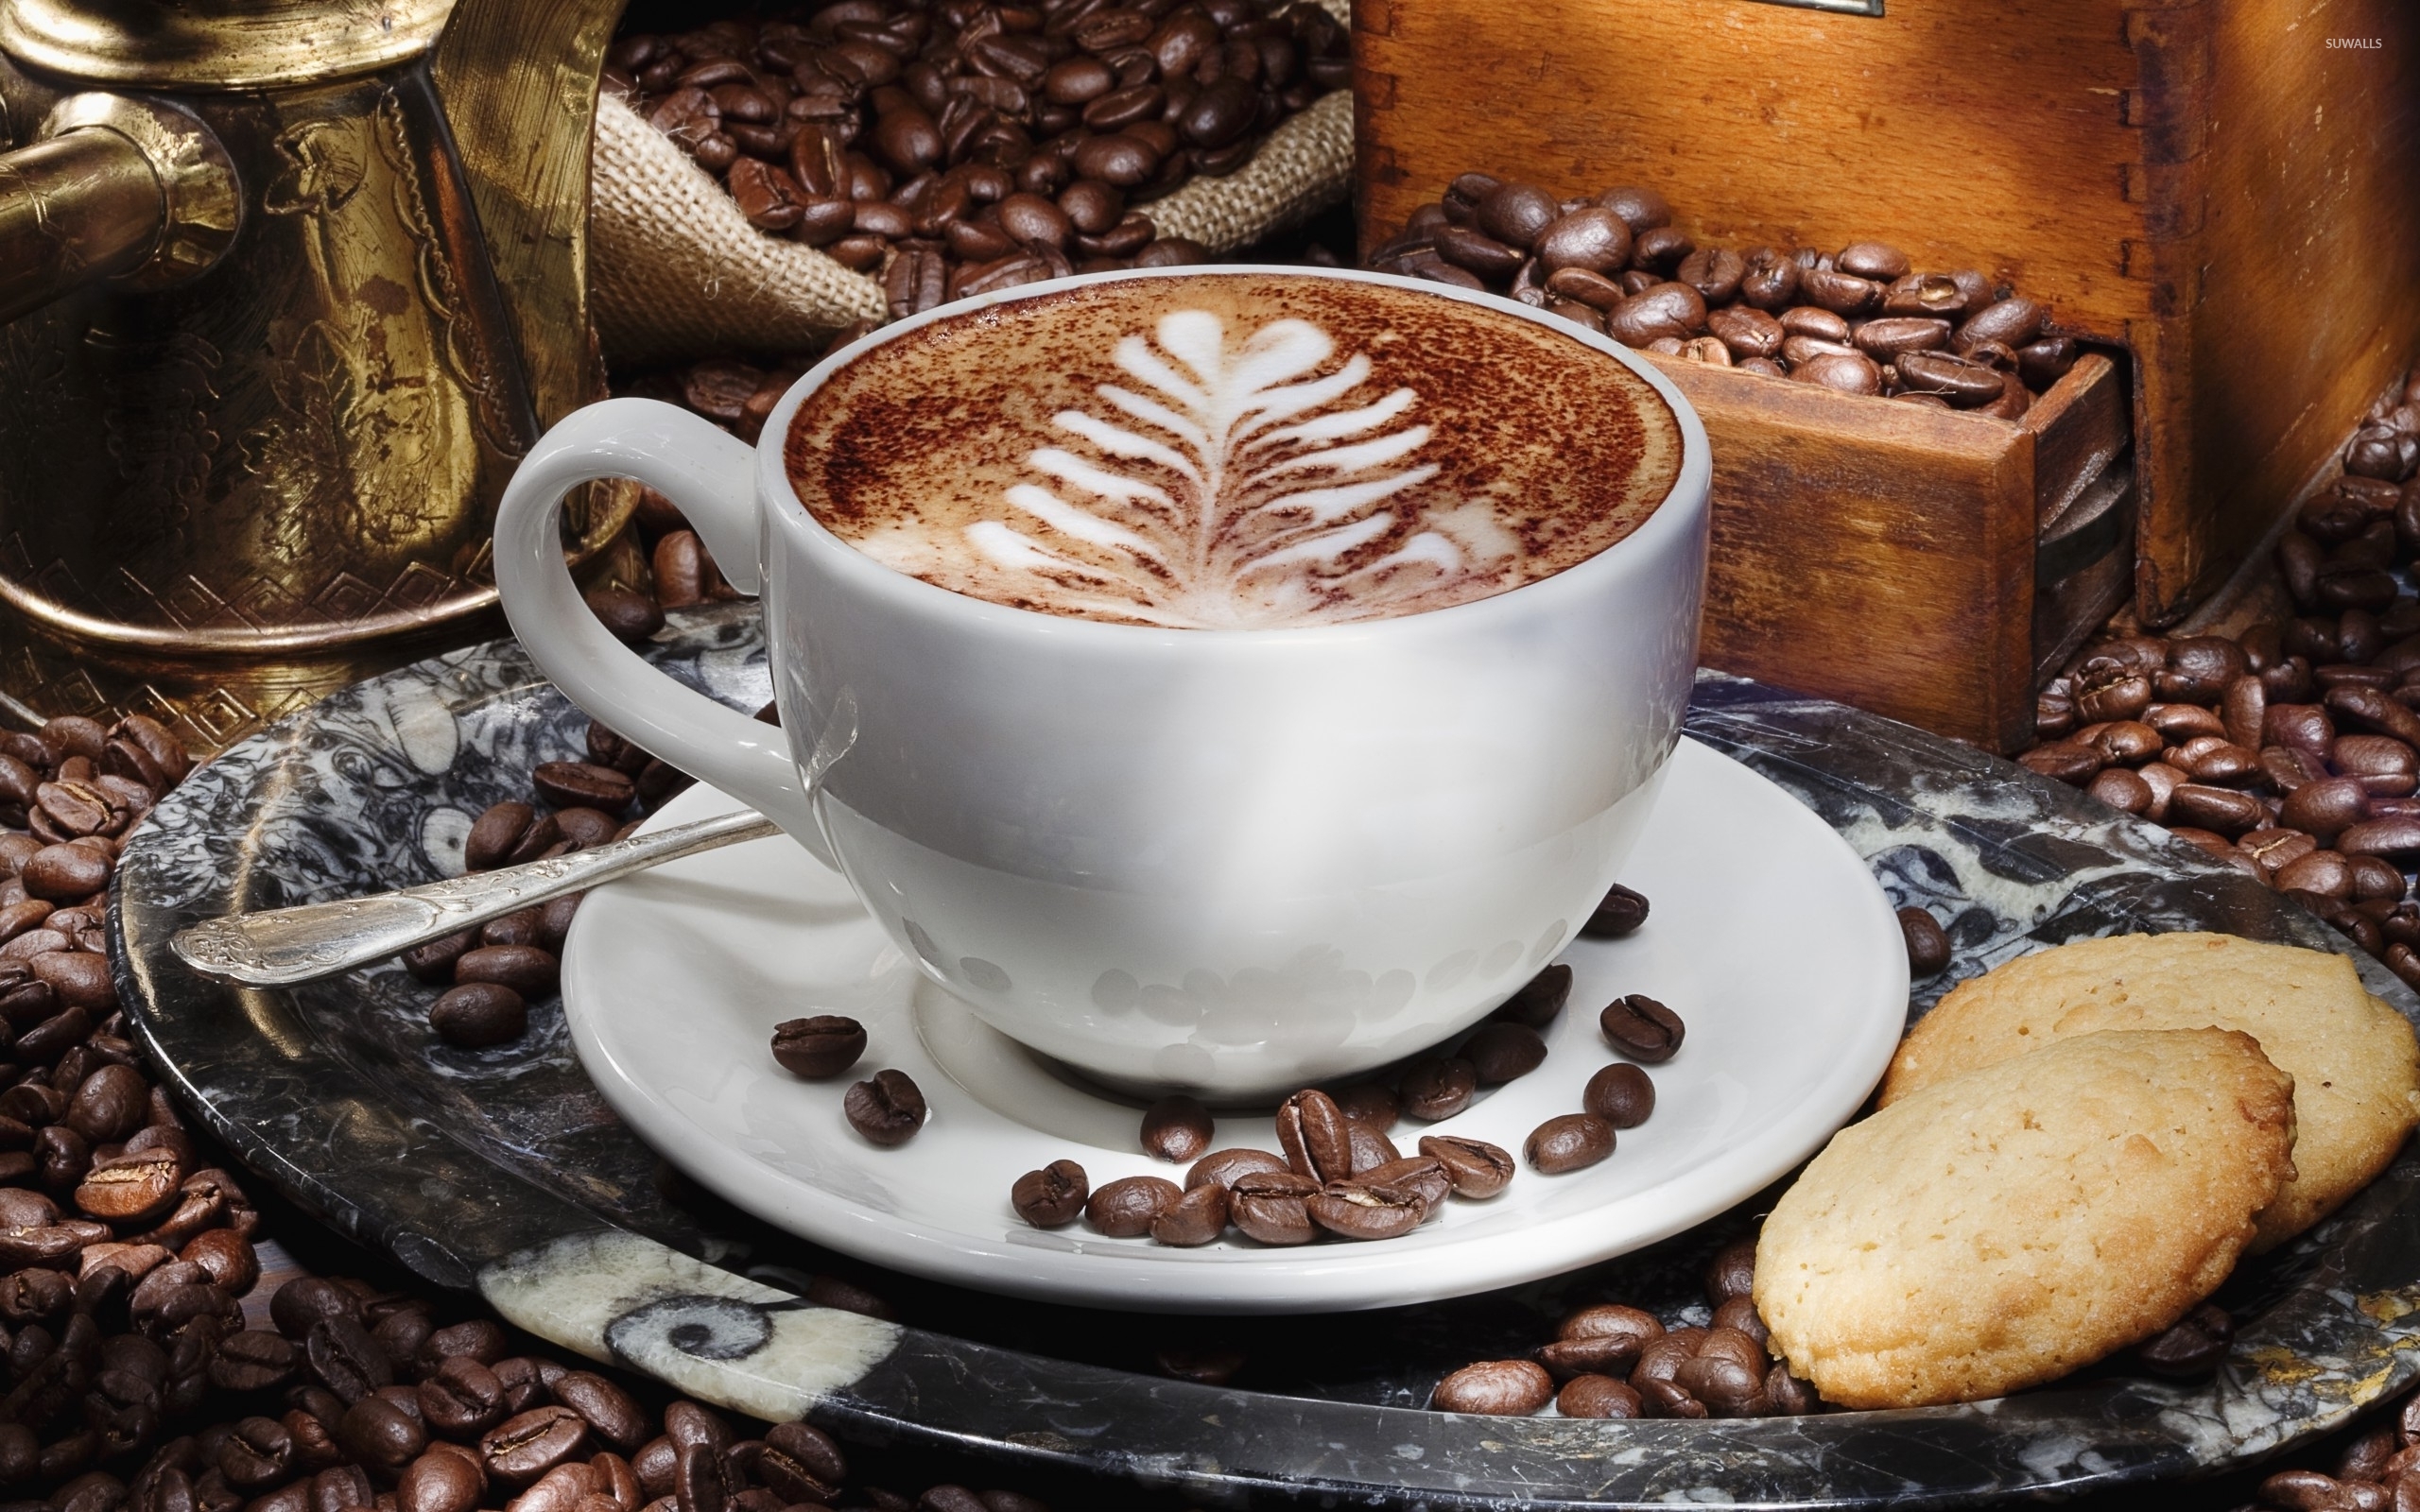 latte-art-on-a-morning-coffee-48709-2560x1600.jpg